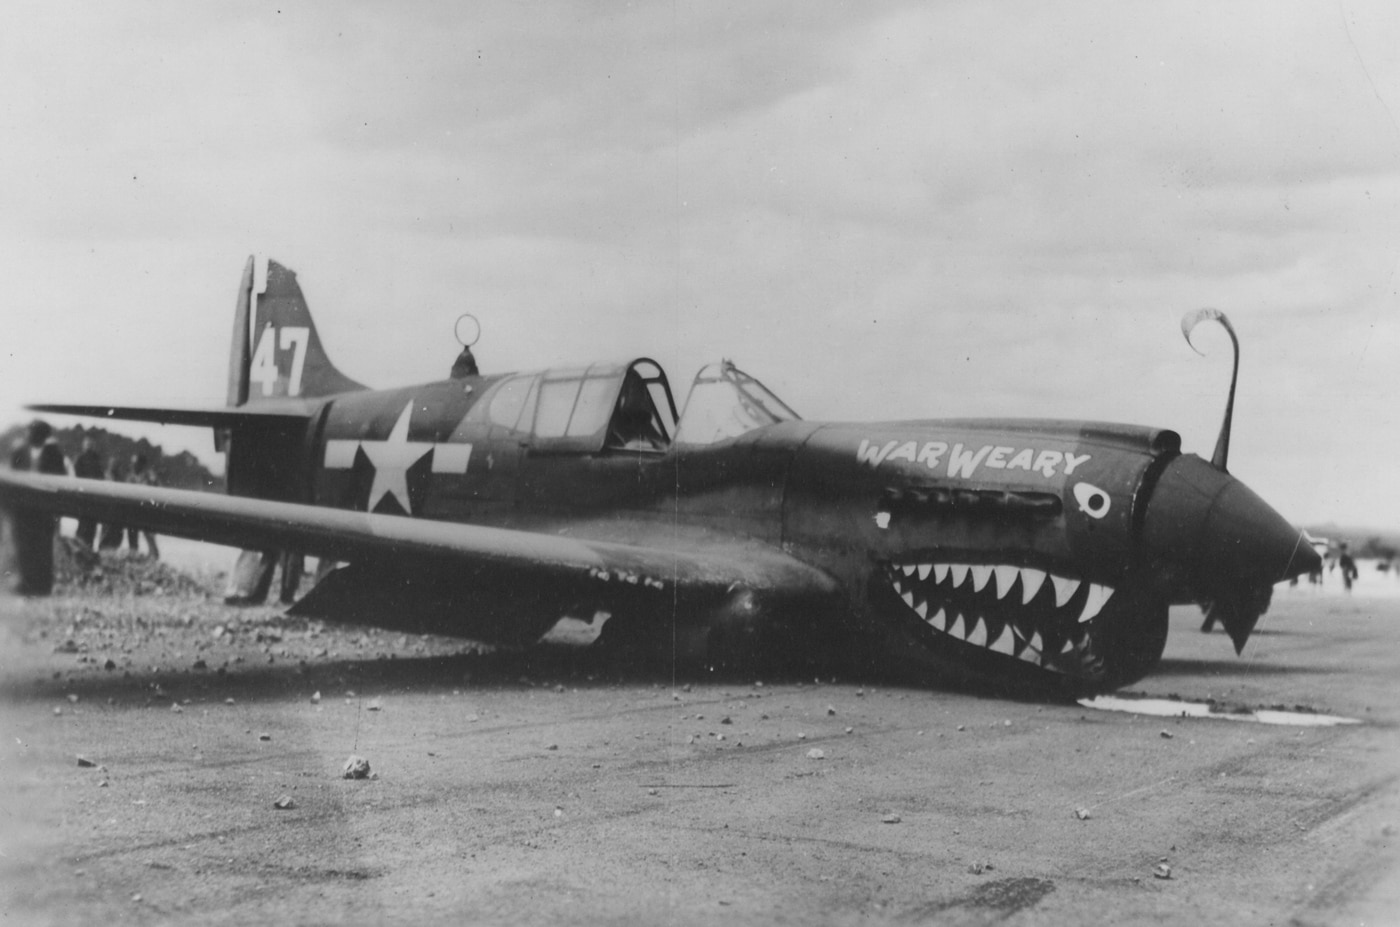 War weary P-40 Warhawk